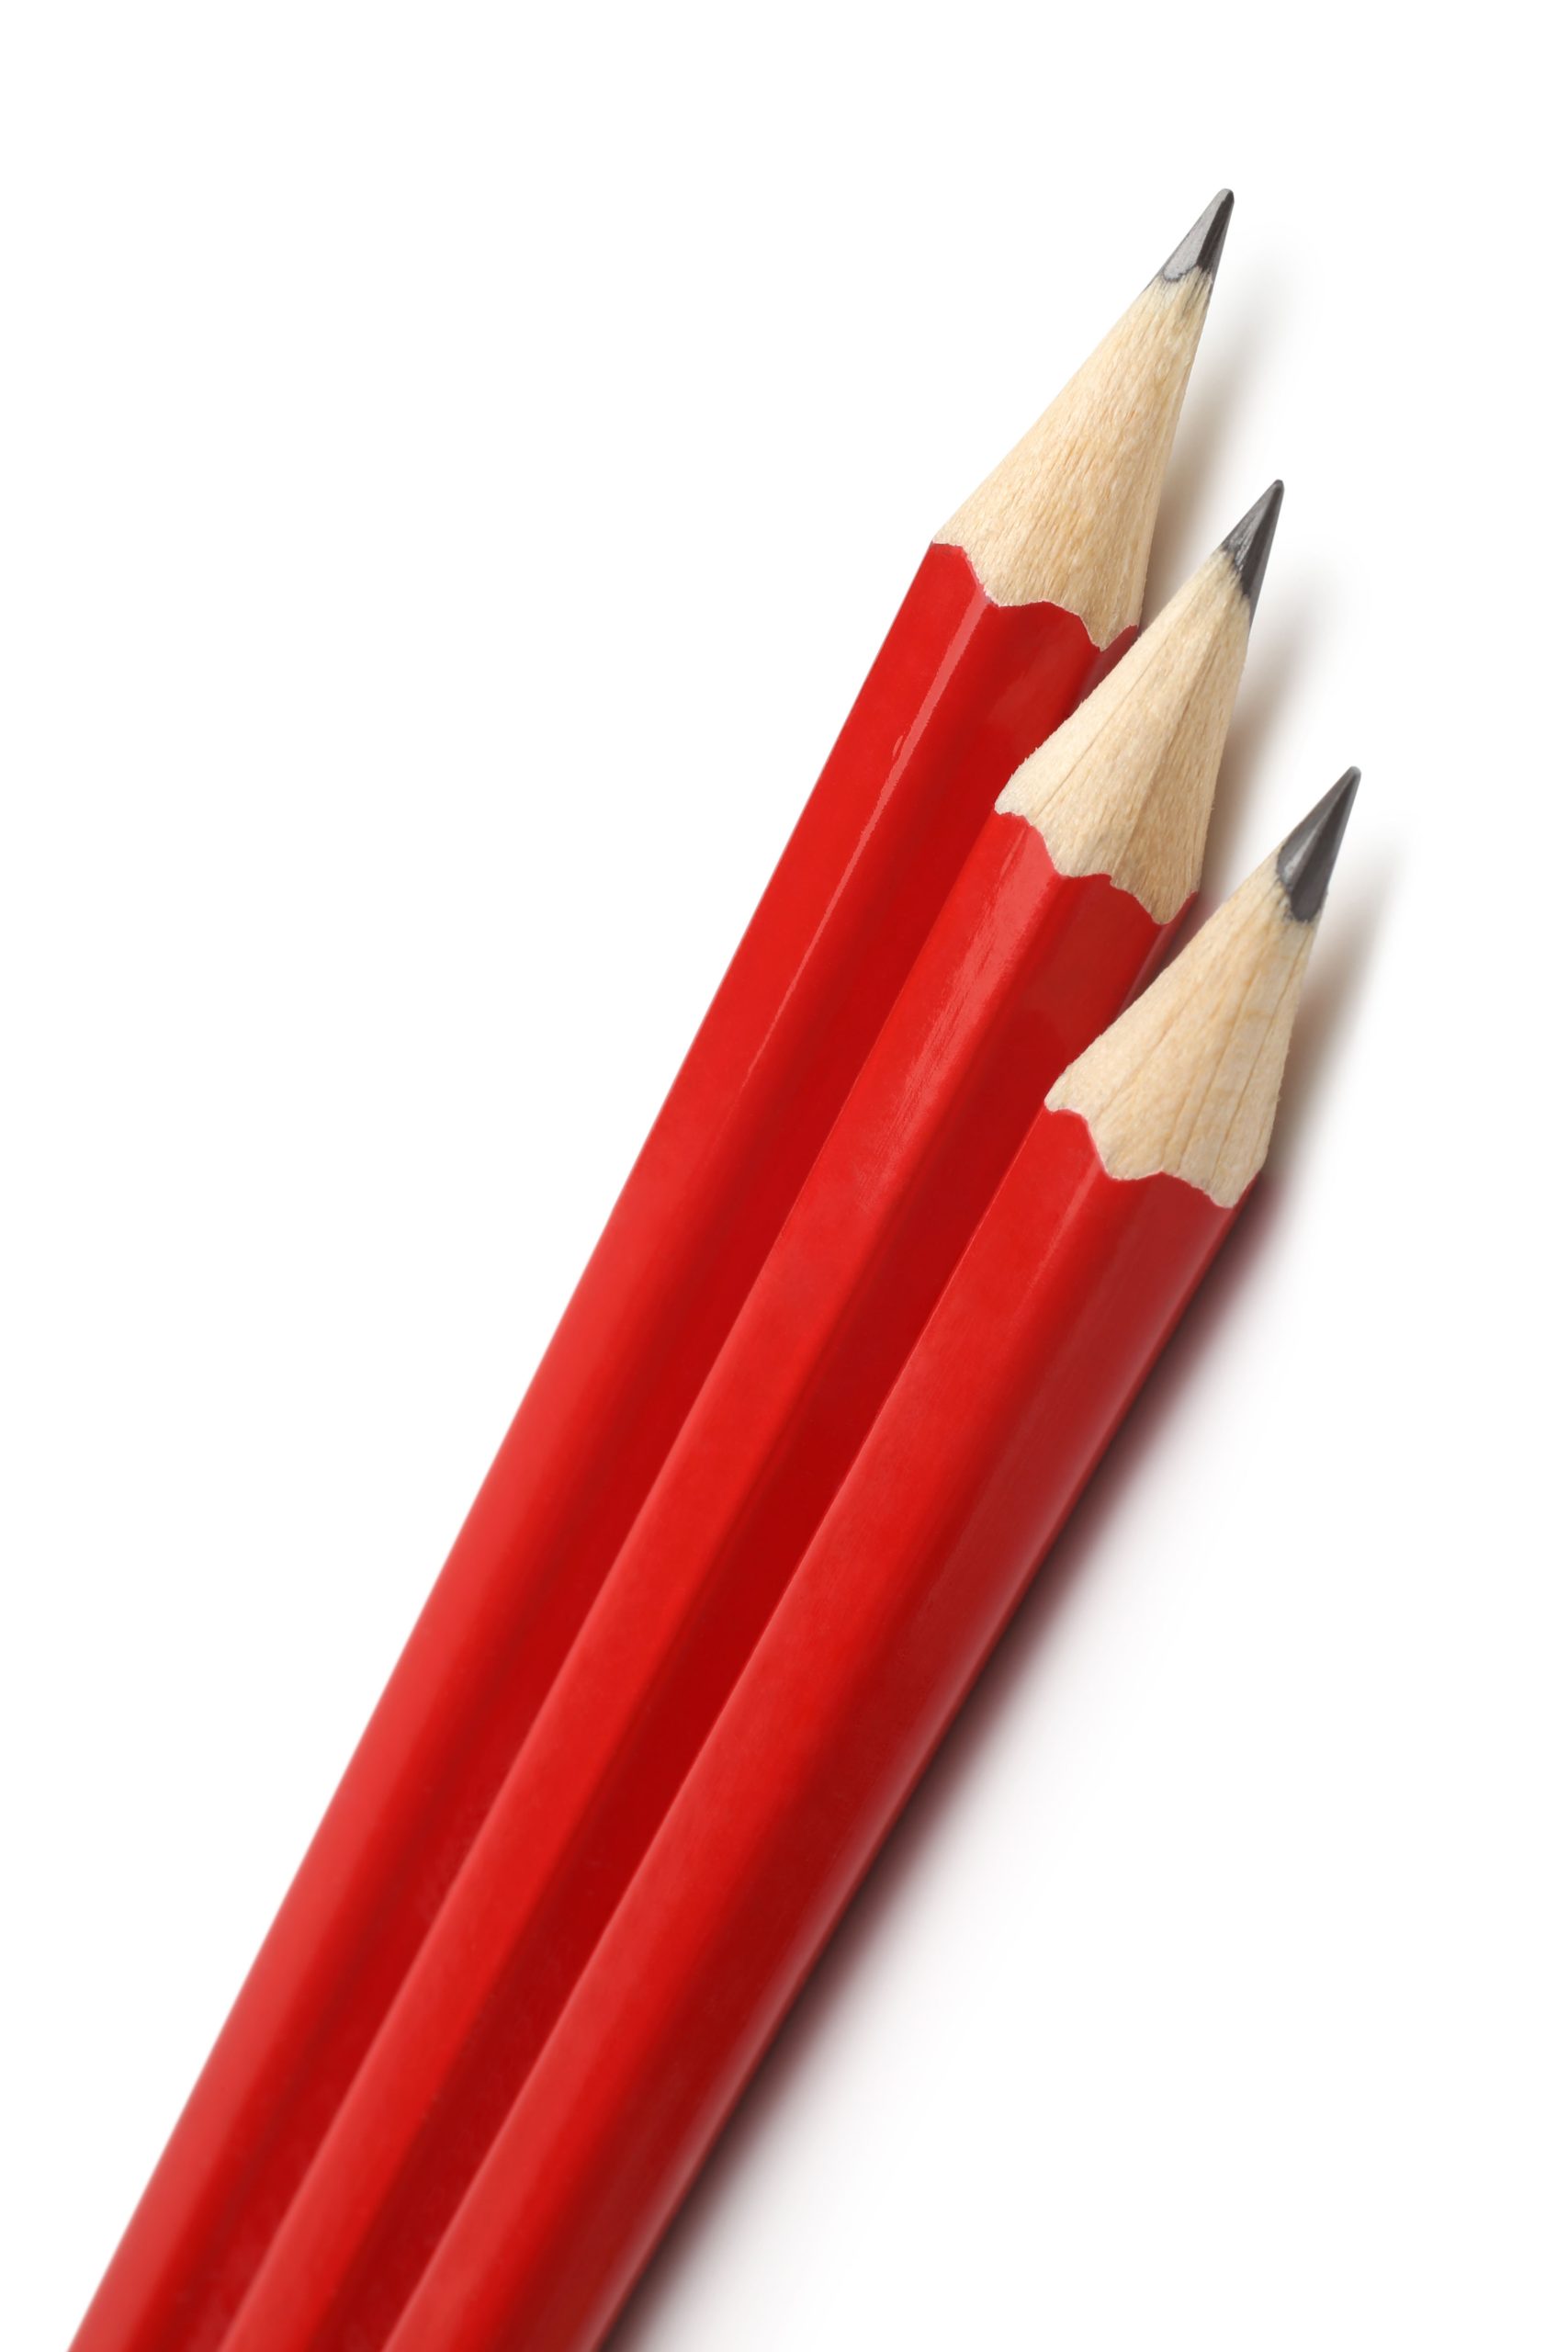 Tre röda blyertspennor mot vit bakgrund